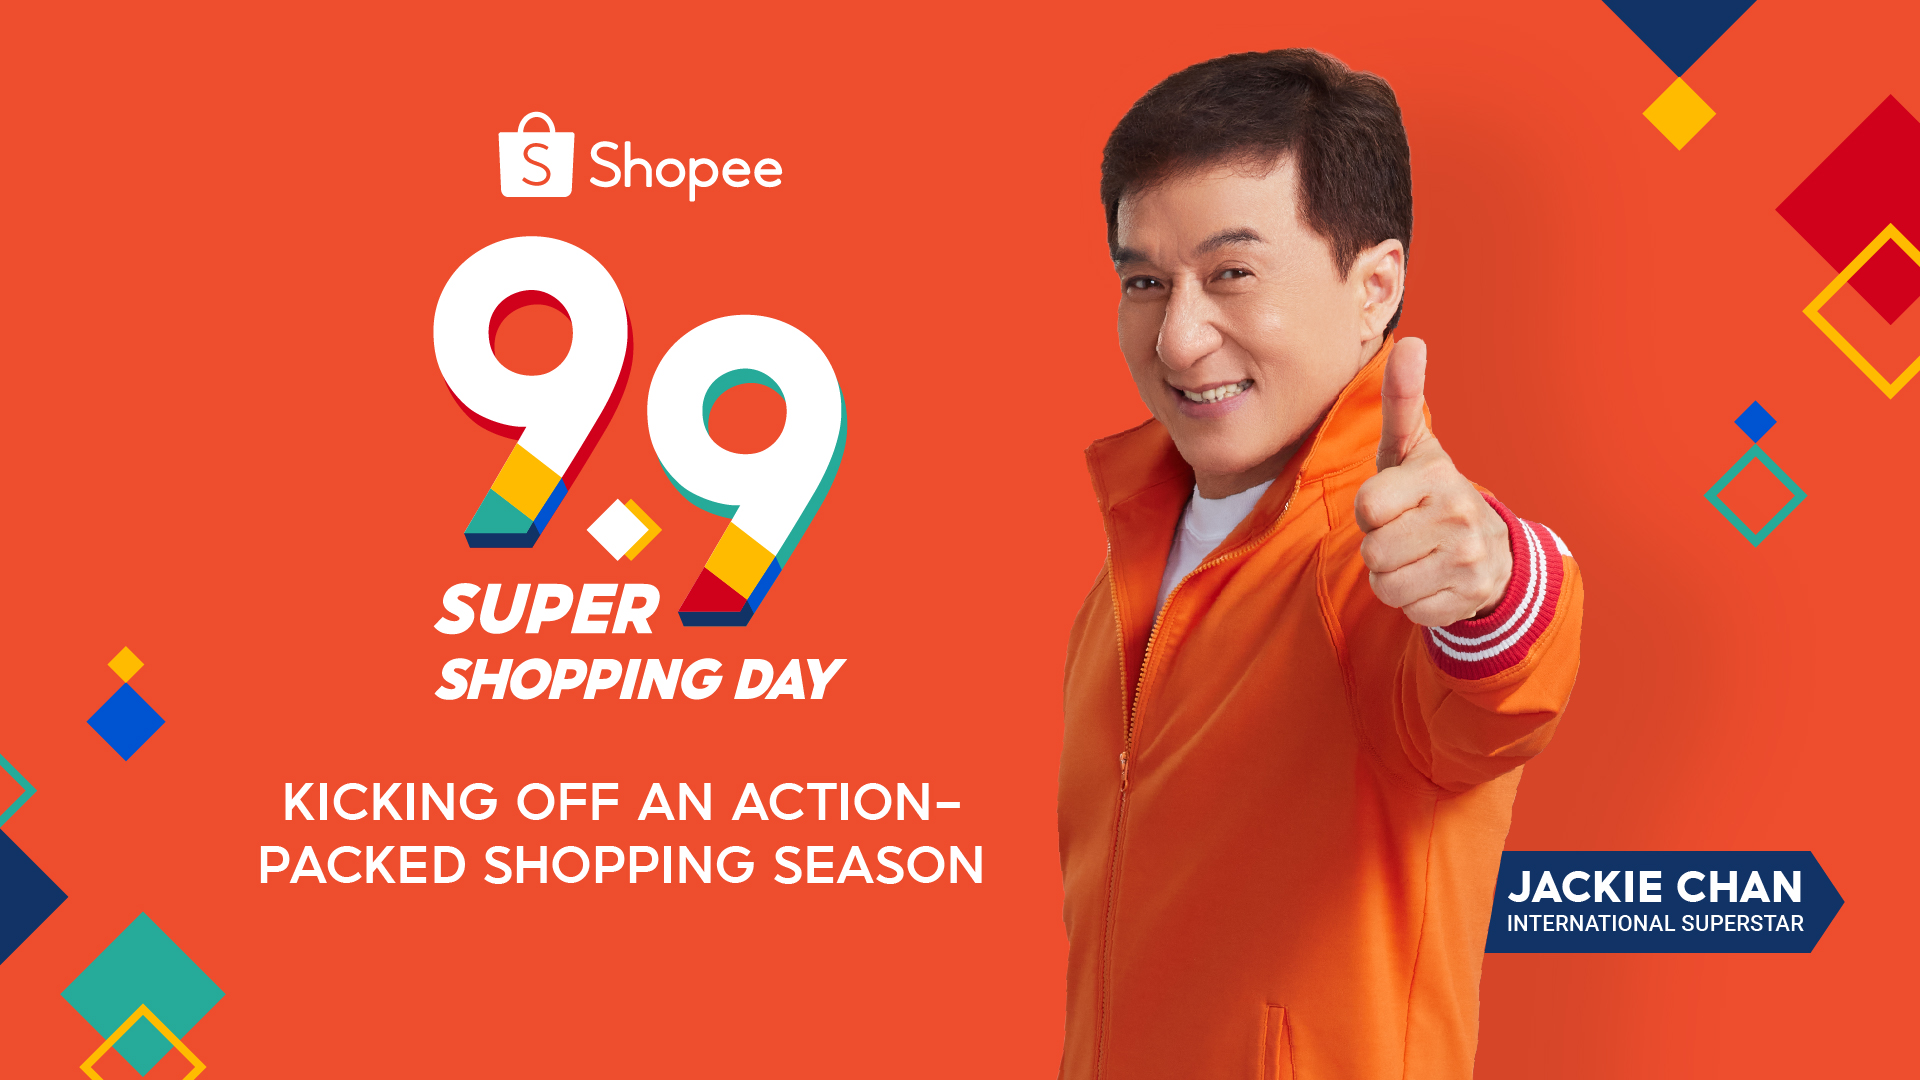 Jackie Chan Regional Brand Ambassador of Shopee